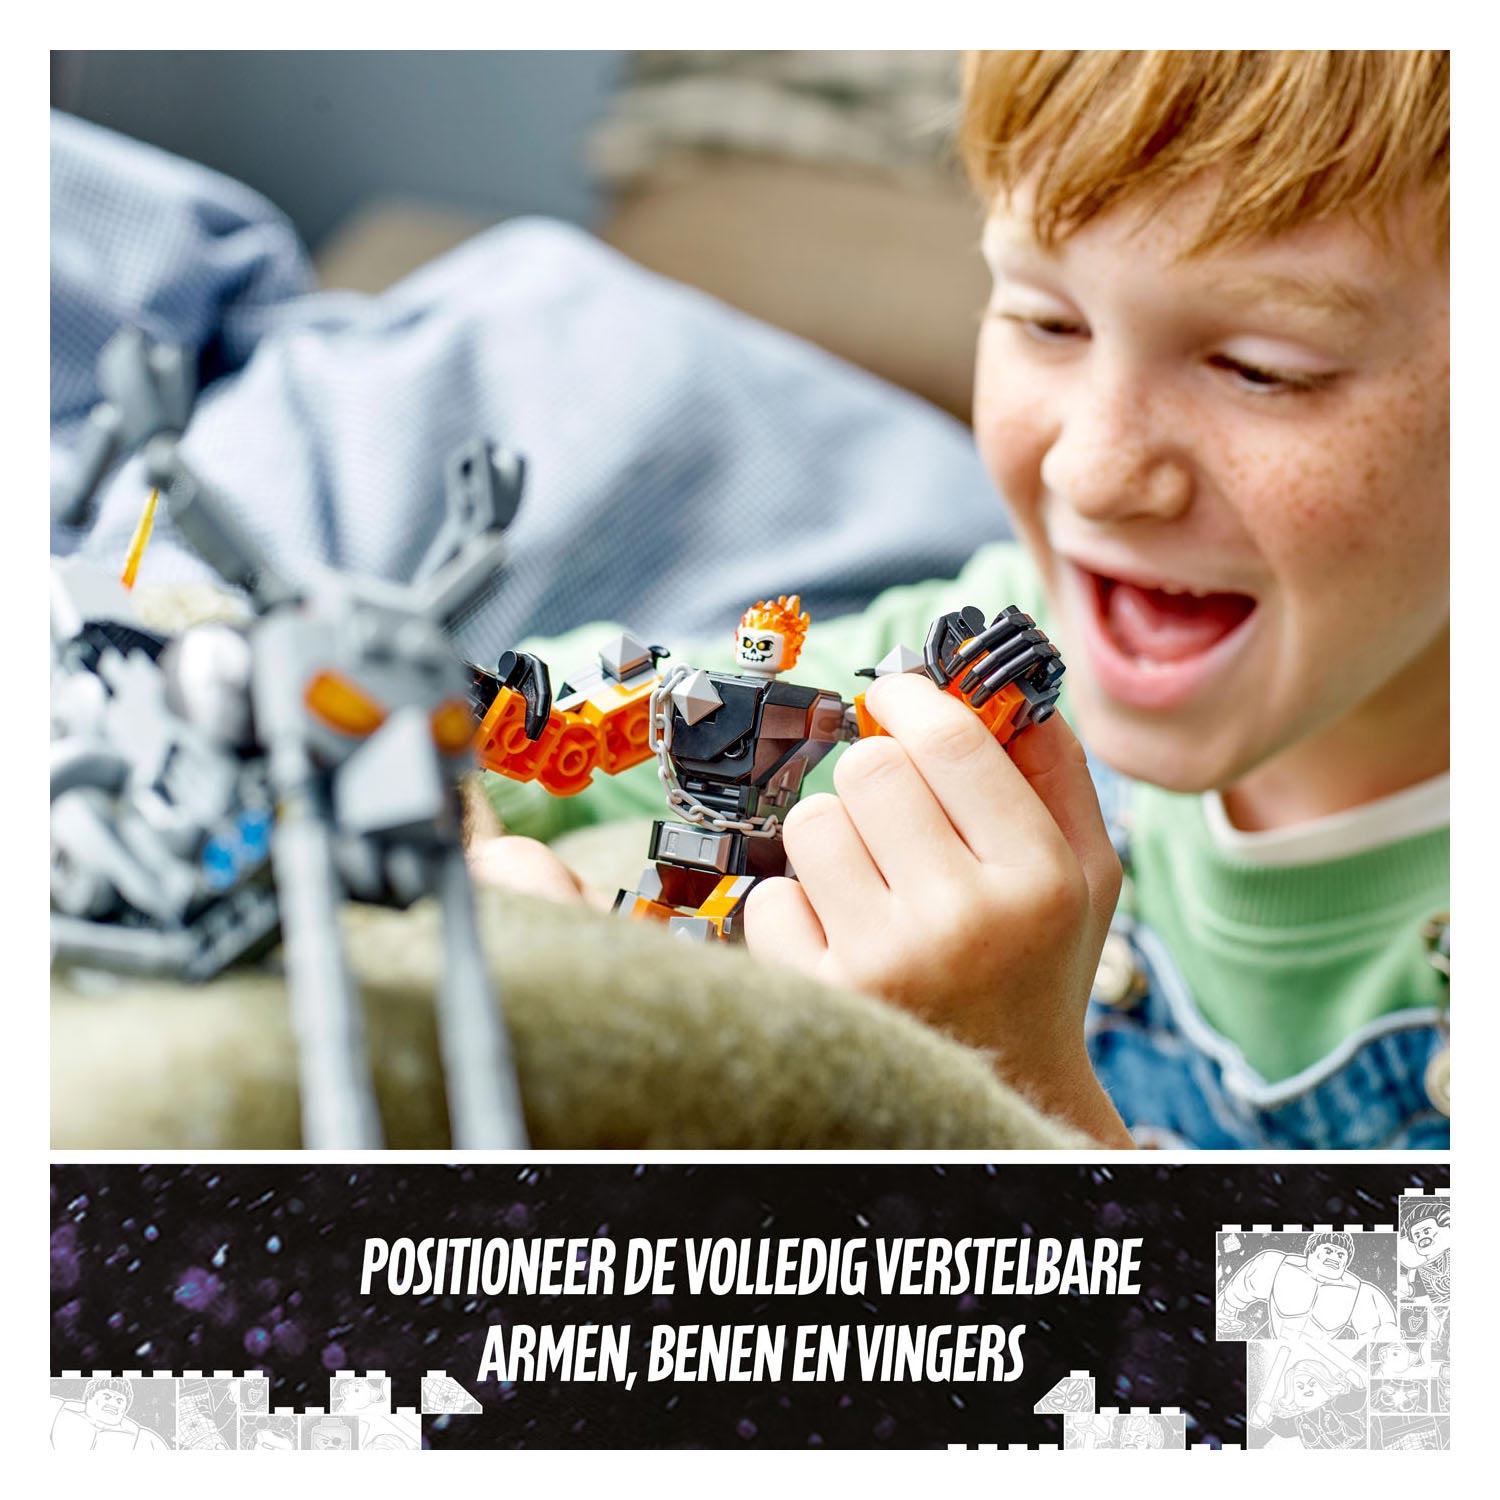 LEGO Marvel 76245 Ghost Rider Mech Motor